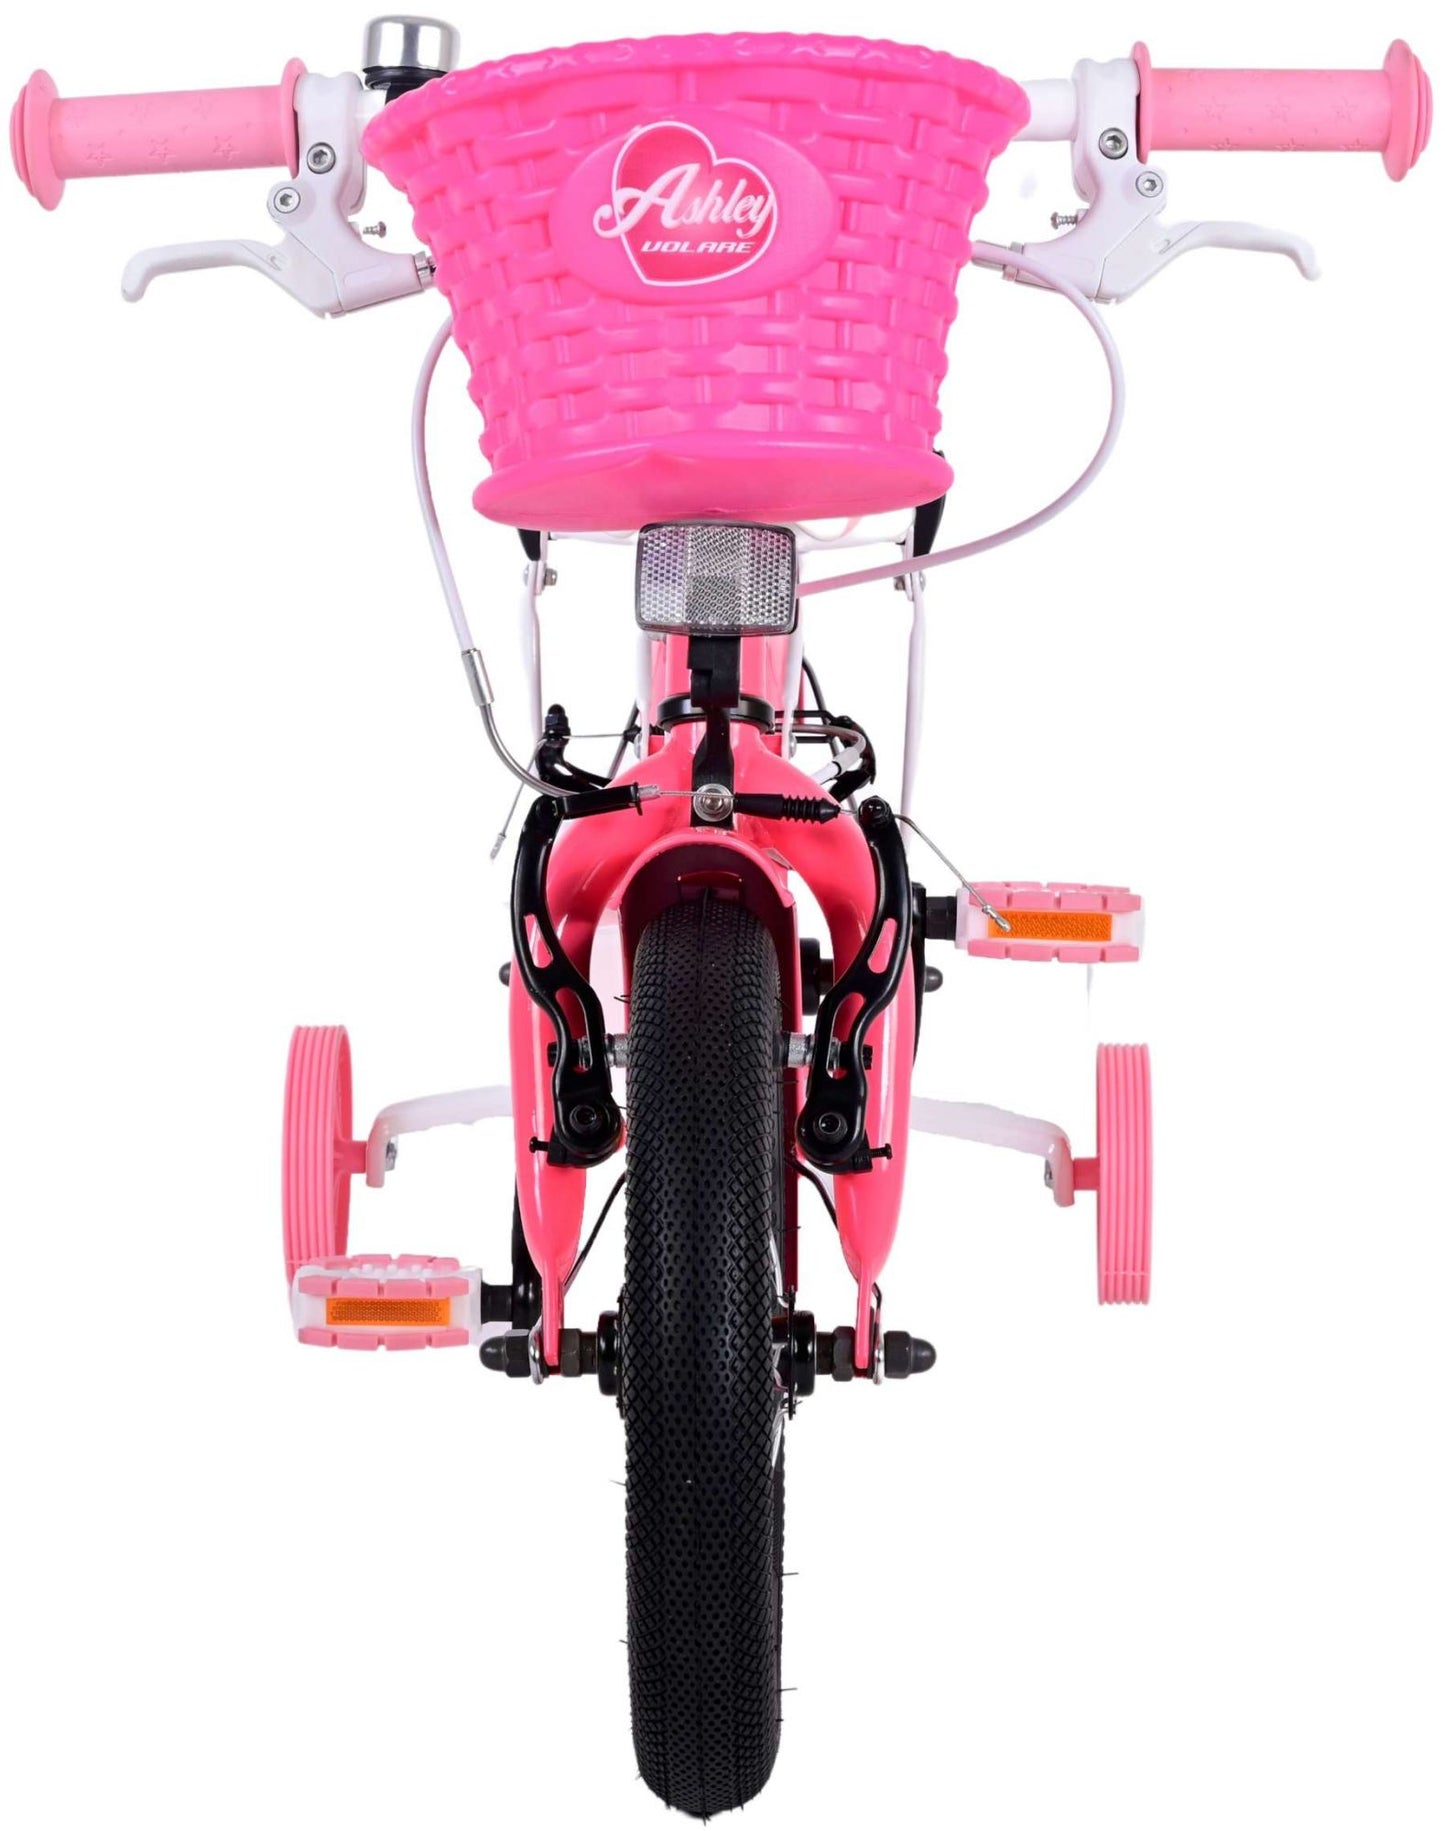 Bicicleta para niños de Vinare Ashley - Niñas - 12 pulgadas - Rojo rosa - Dos frenos de mano